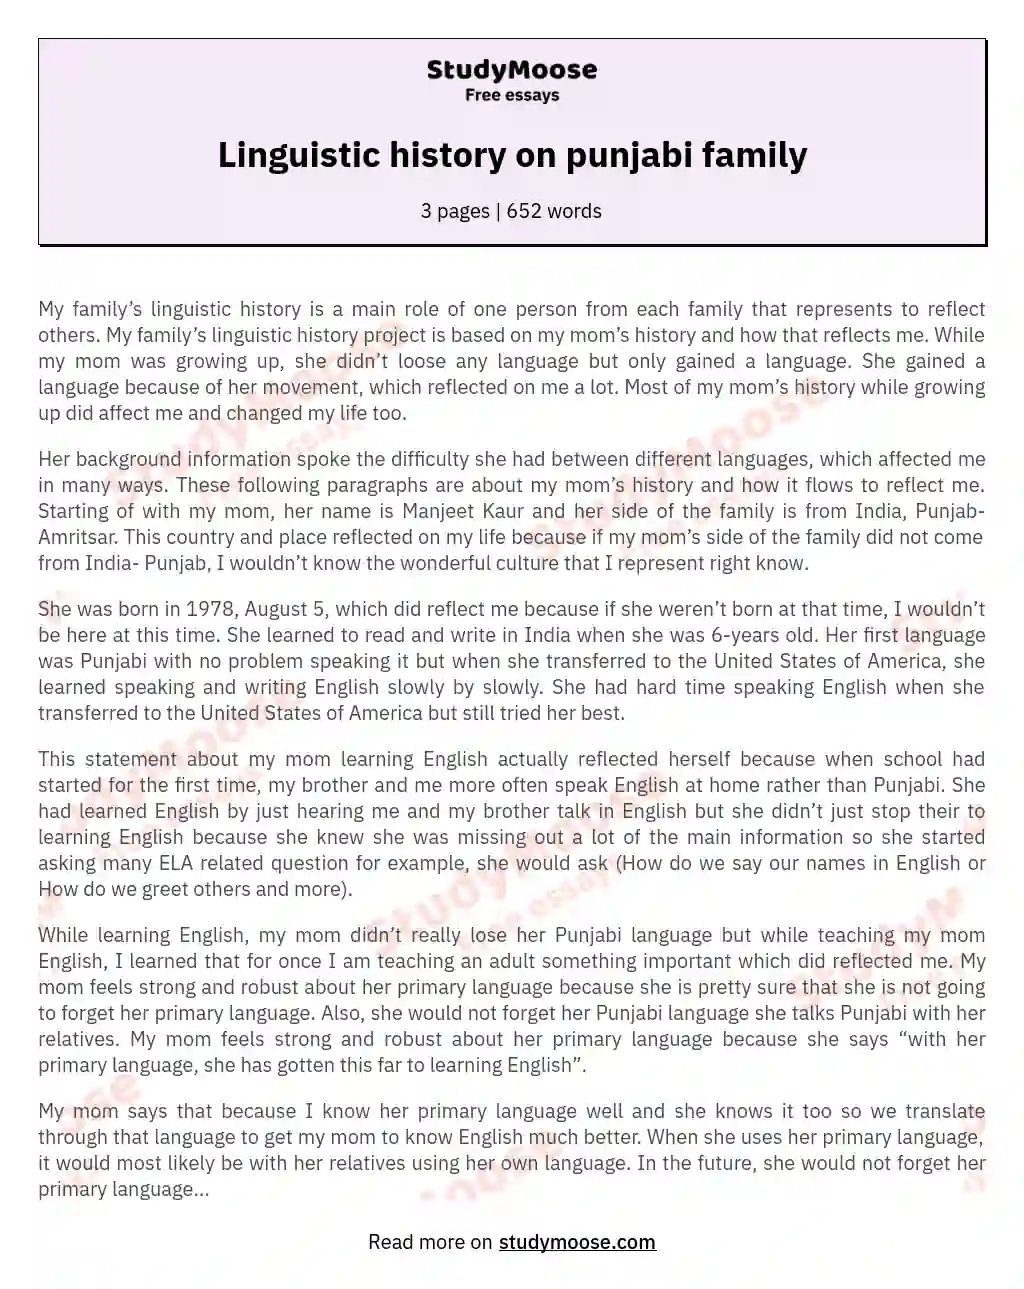 Linguistic history on punjabi family essay